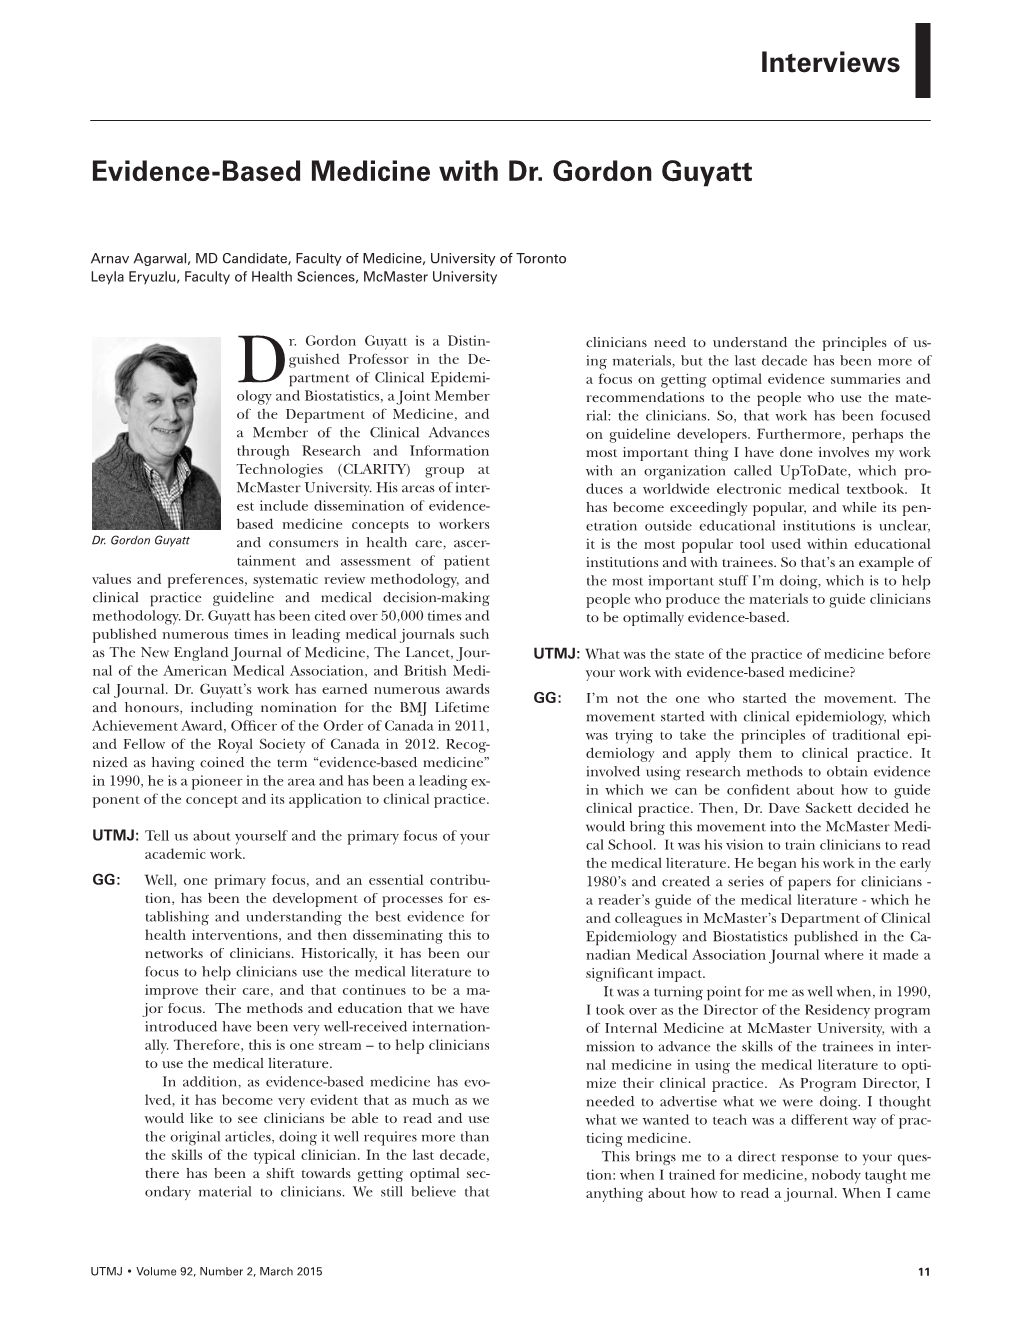 Evidence-Based Medicine with Dr. Gordon Guyatt Interviews